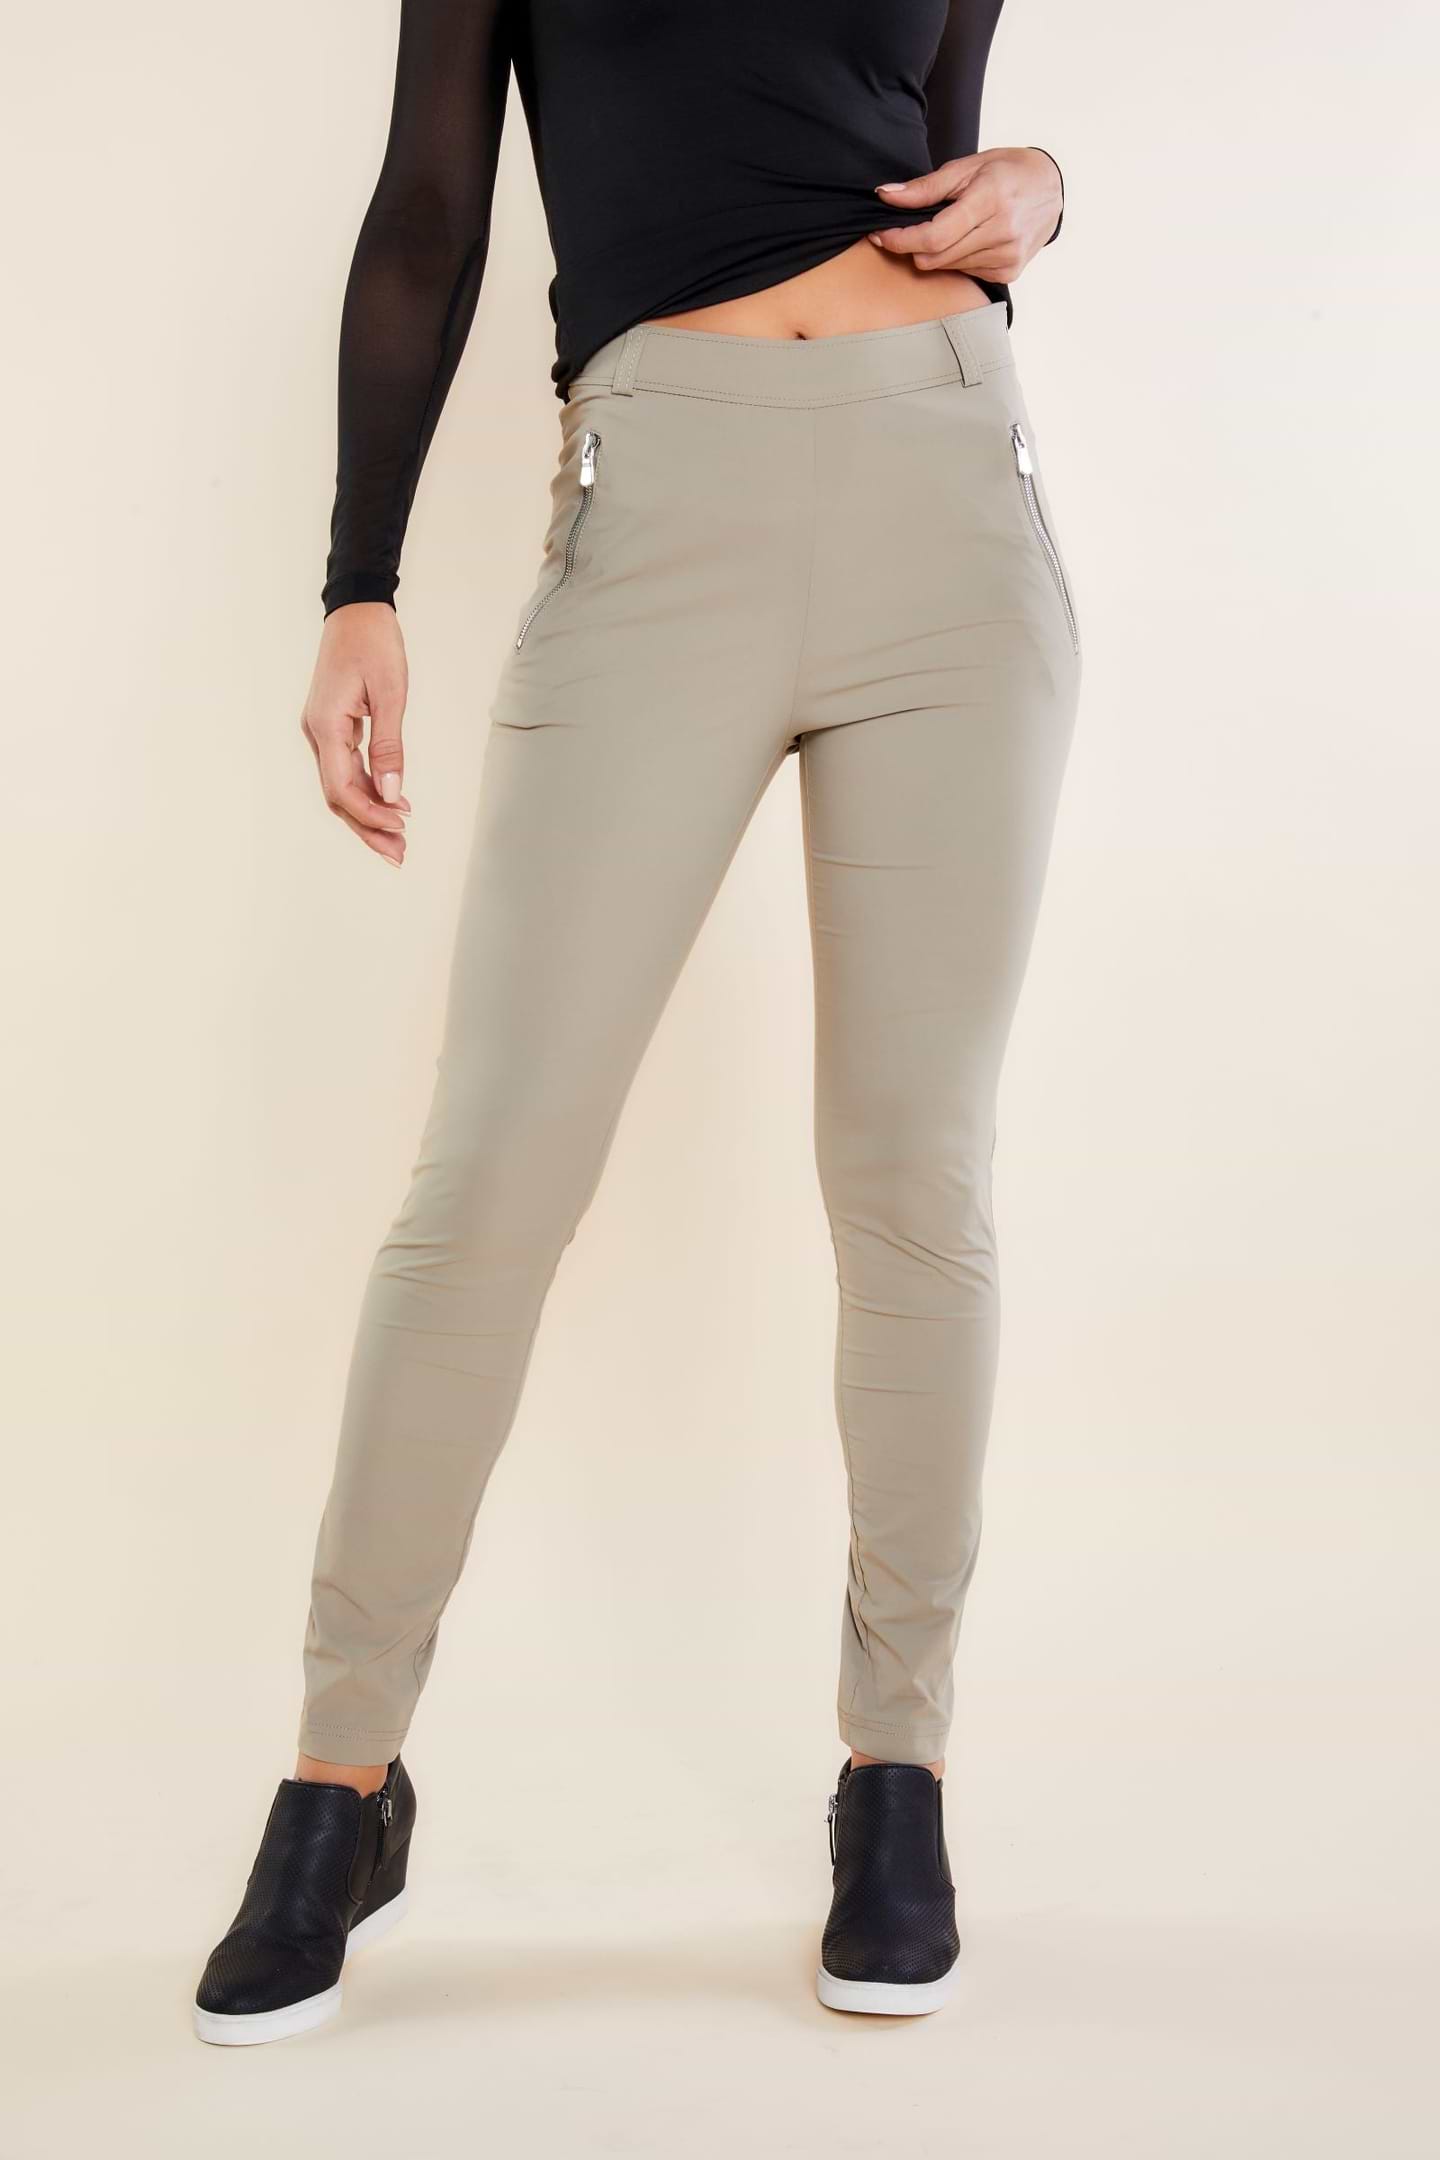 Buy DHRUVI TRENDZ Women's Regular Trousers (DT-TR-706_Black_S) at Amazon.in